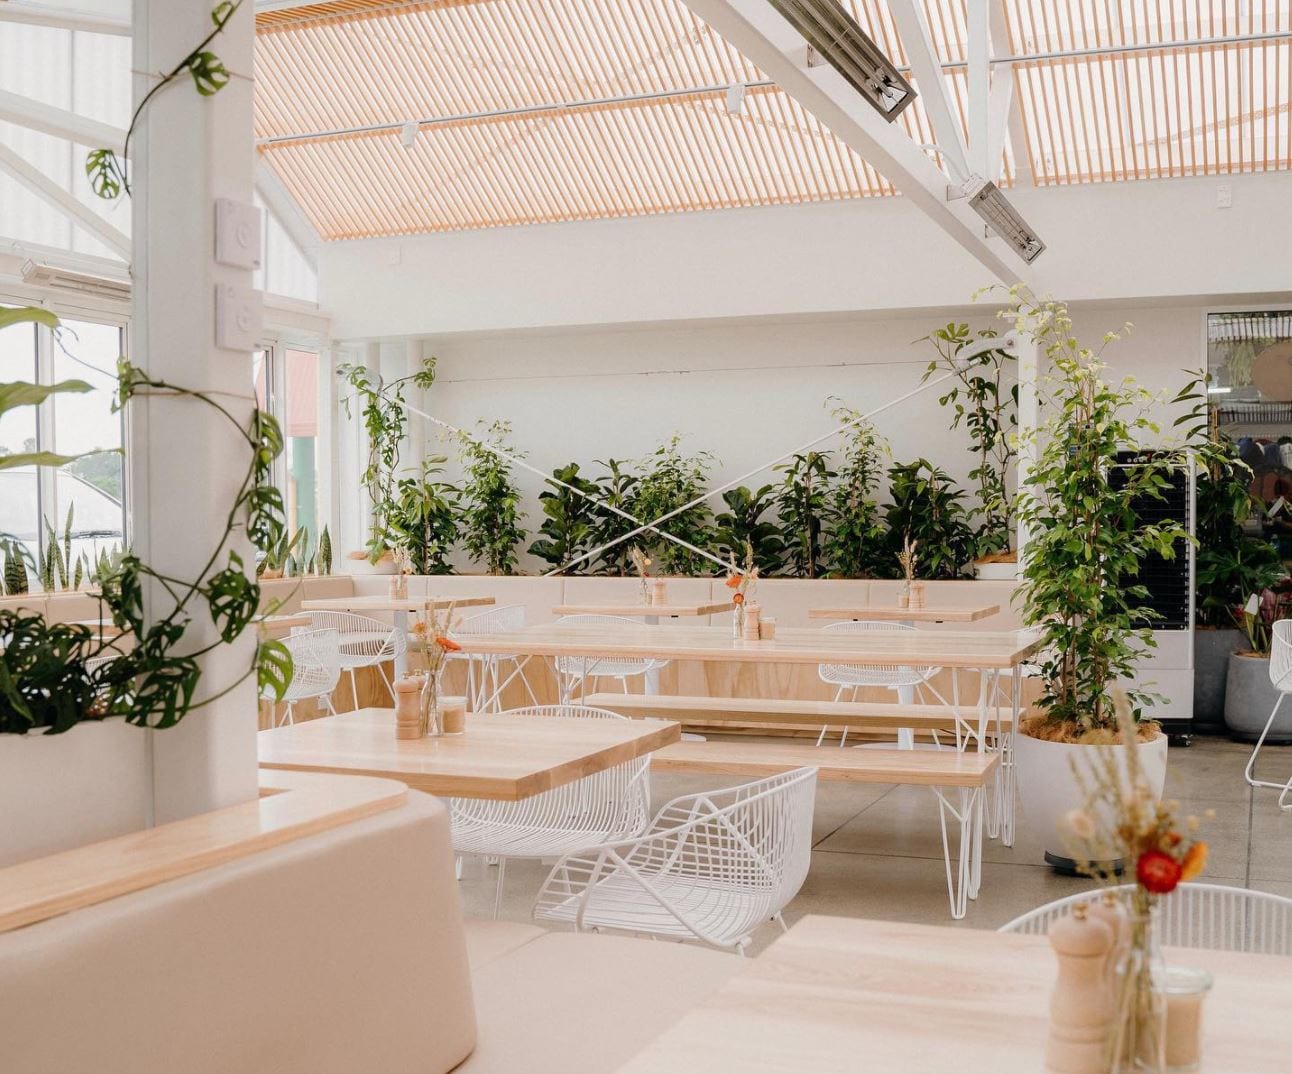 Kings Garden Cafe in Botany 2020